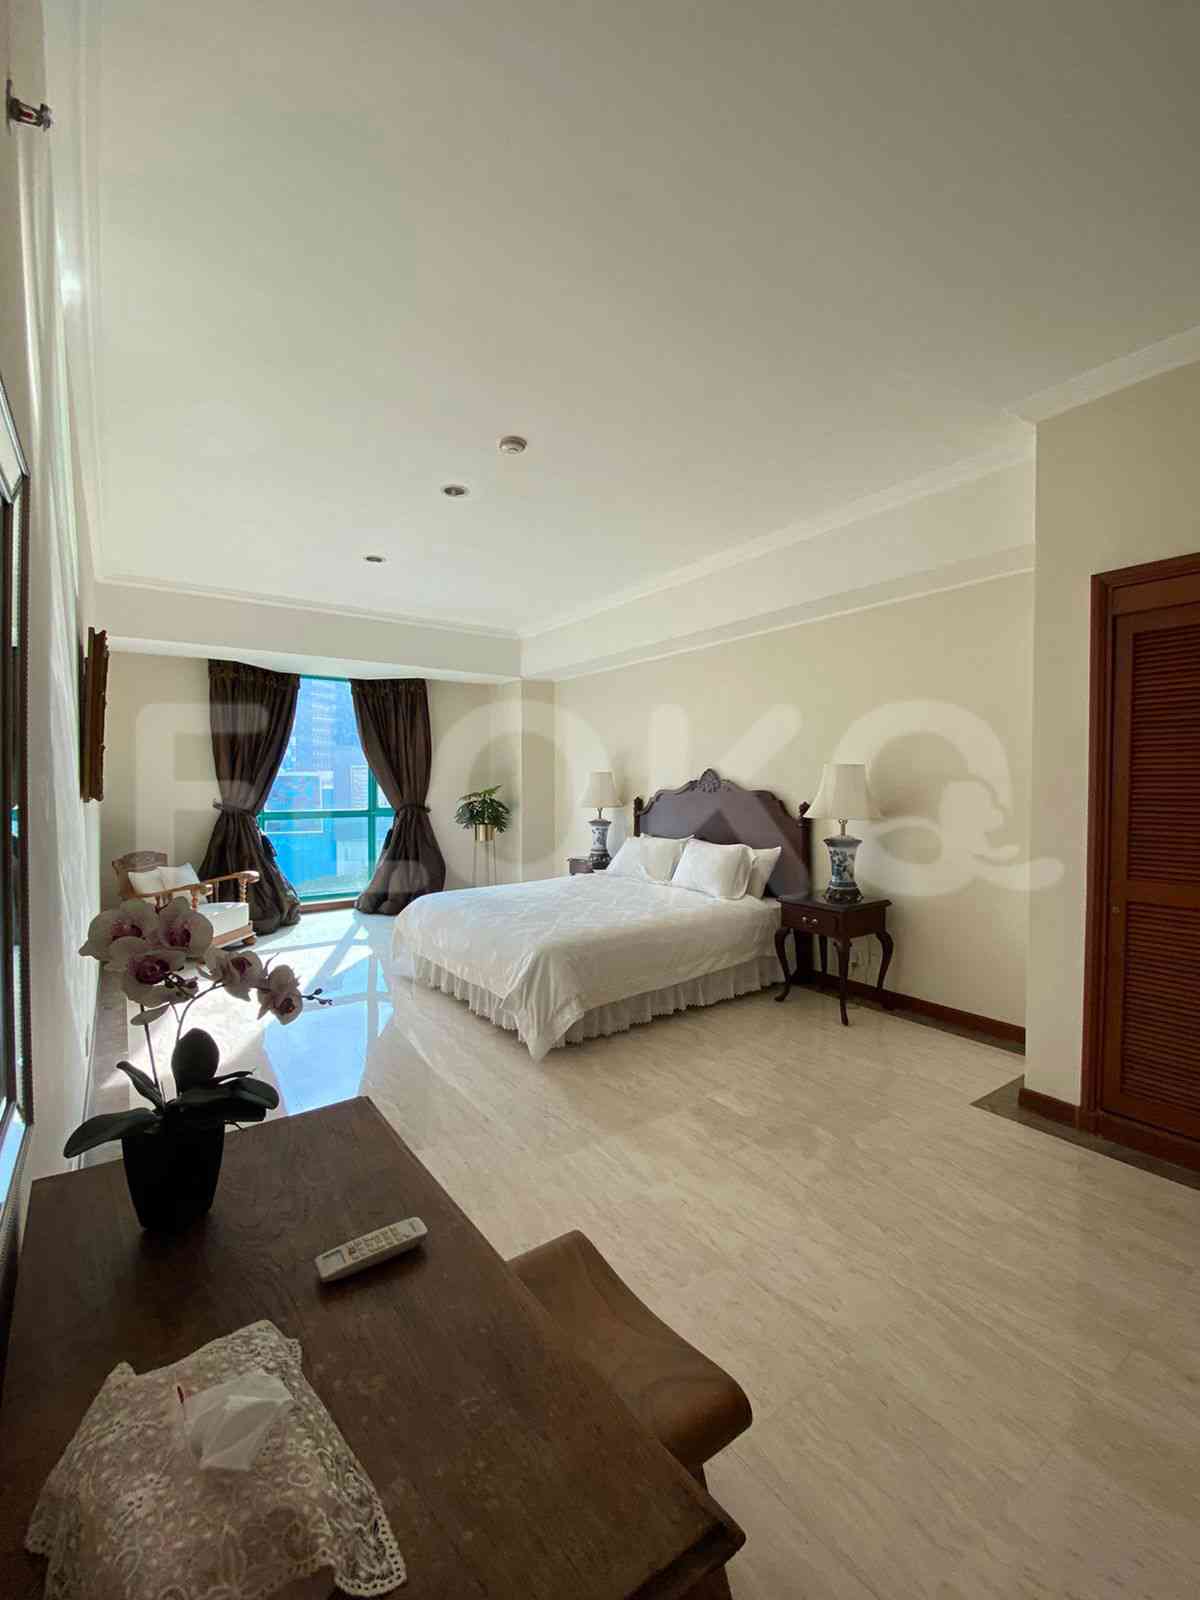 3 Bedroom on 10th Floor for Rent in Casablanca Apartment - fte130 6